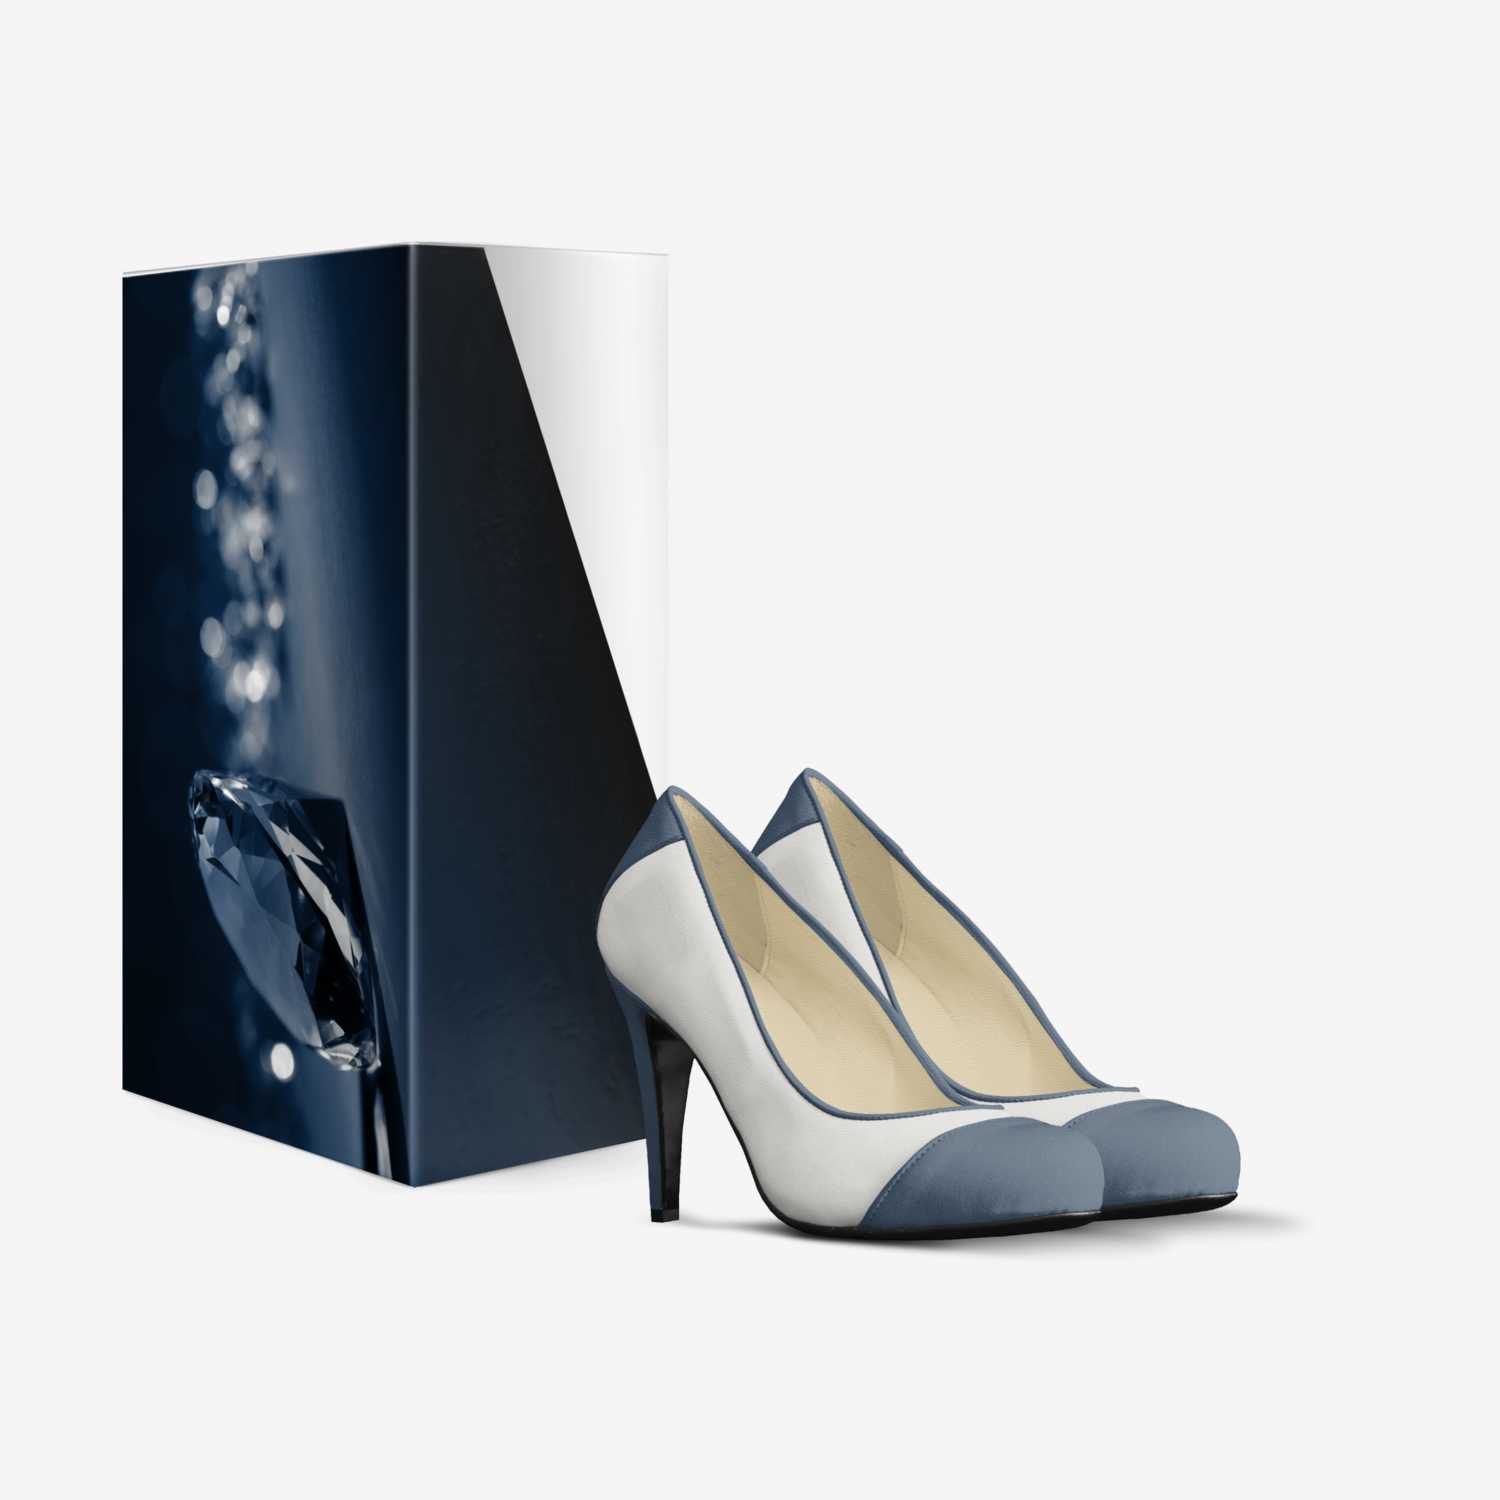 ICDestiny custom made in Italy shoes by Ilyssa Decasperis | Box view